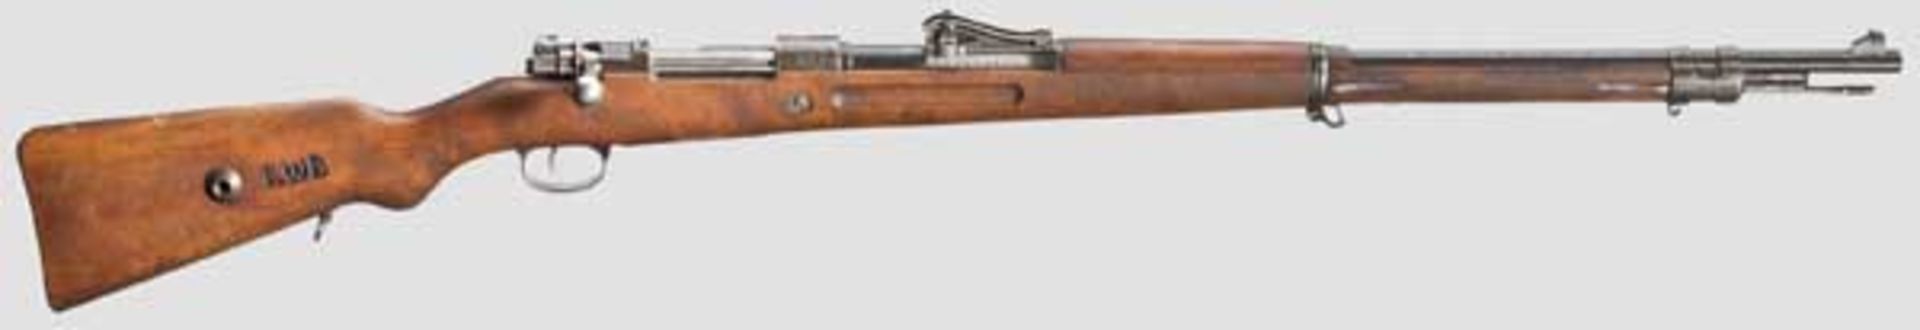 Gewehr 98, Amberg, 1917, Glasvisier, EWB Kal. 8 x 57, Nr. 8400v. Vollkommen nummerngleich inkl.